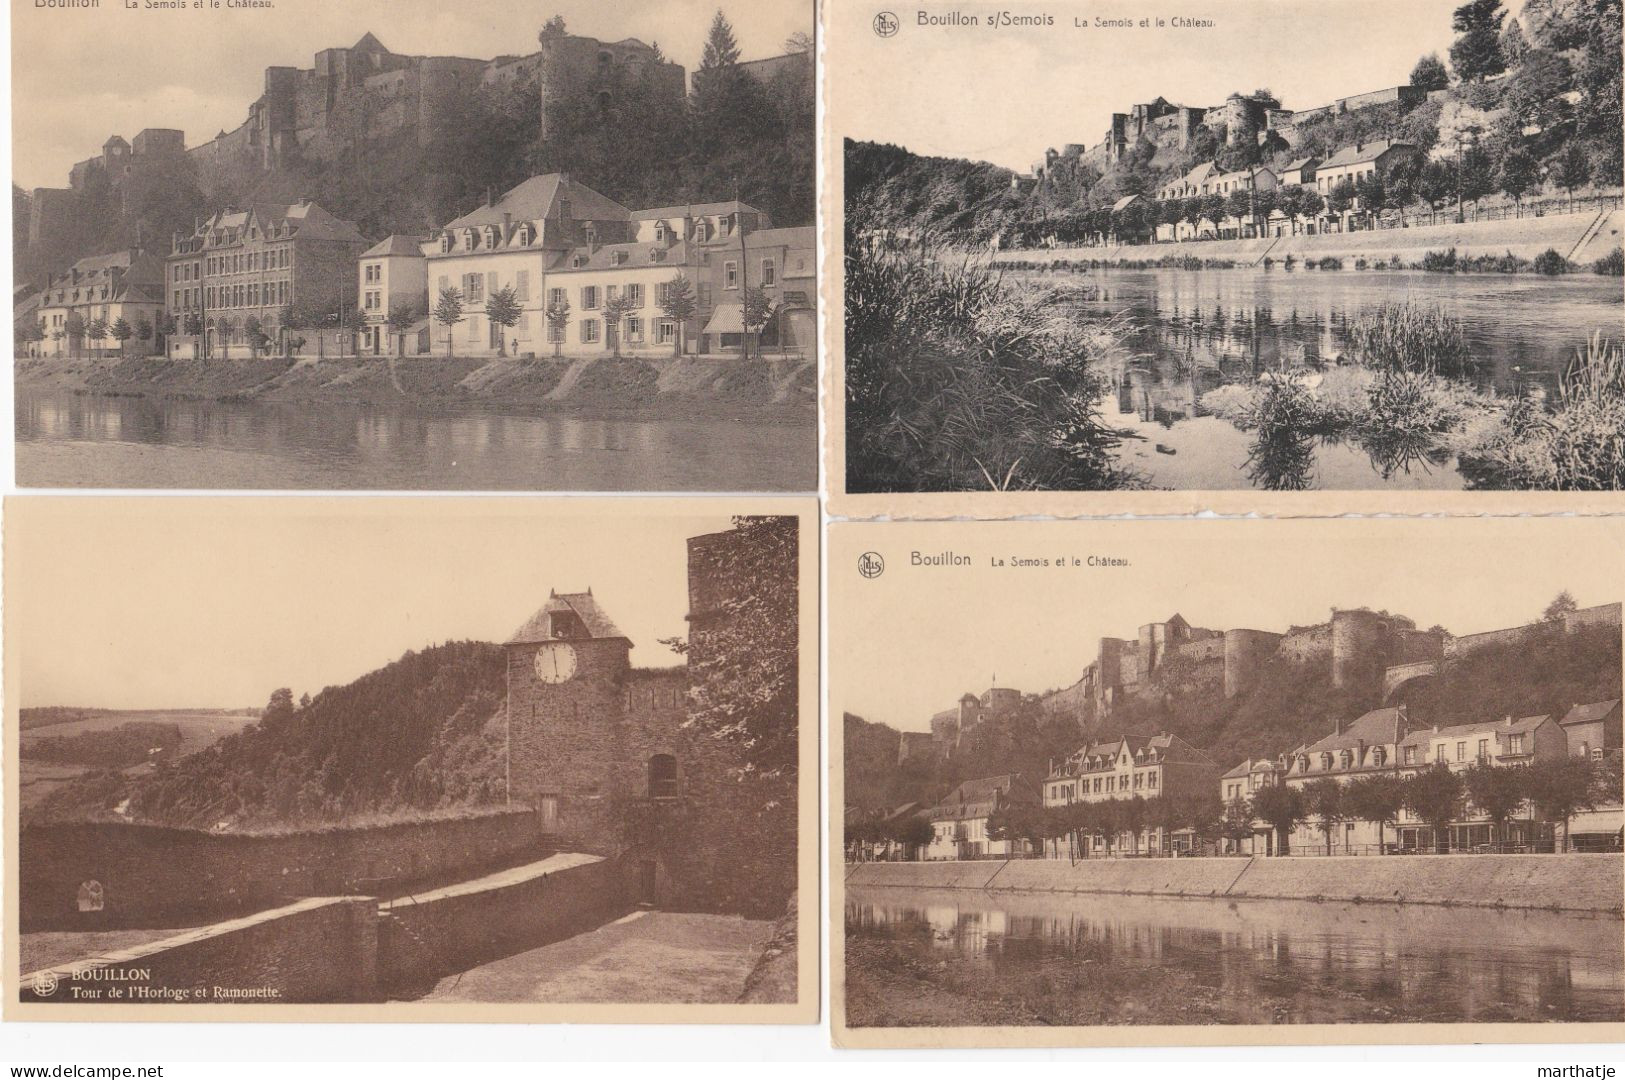 39 Cartes Postales De Bouillon - Province Luxemburg - Belgique - Sammlungen & Sammellose